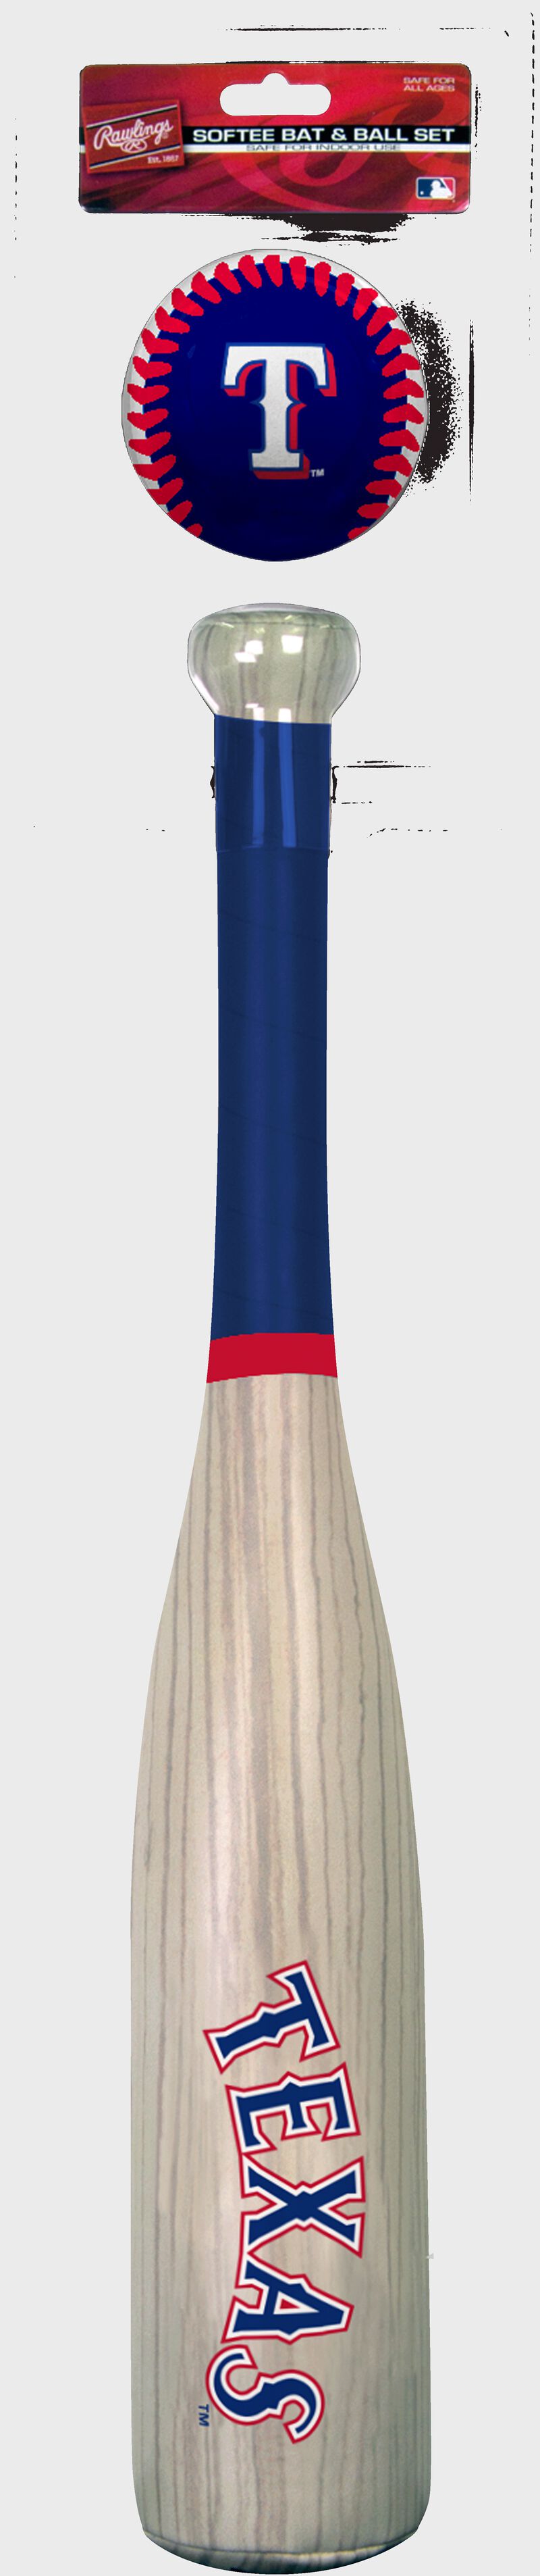 A Texas Rangers grand slam softee bat & ball set - SKU: 07380022111